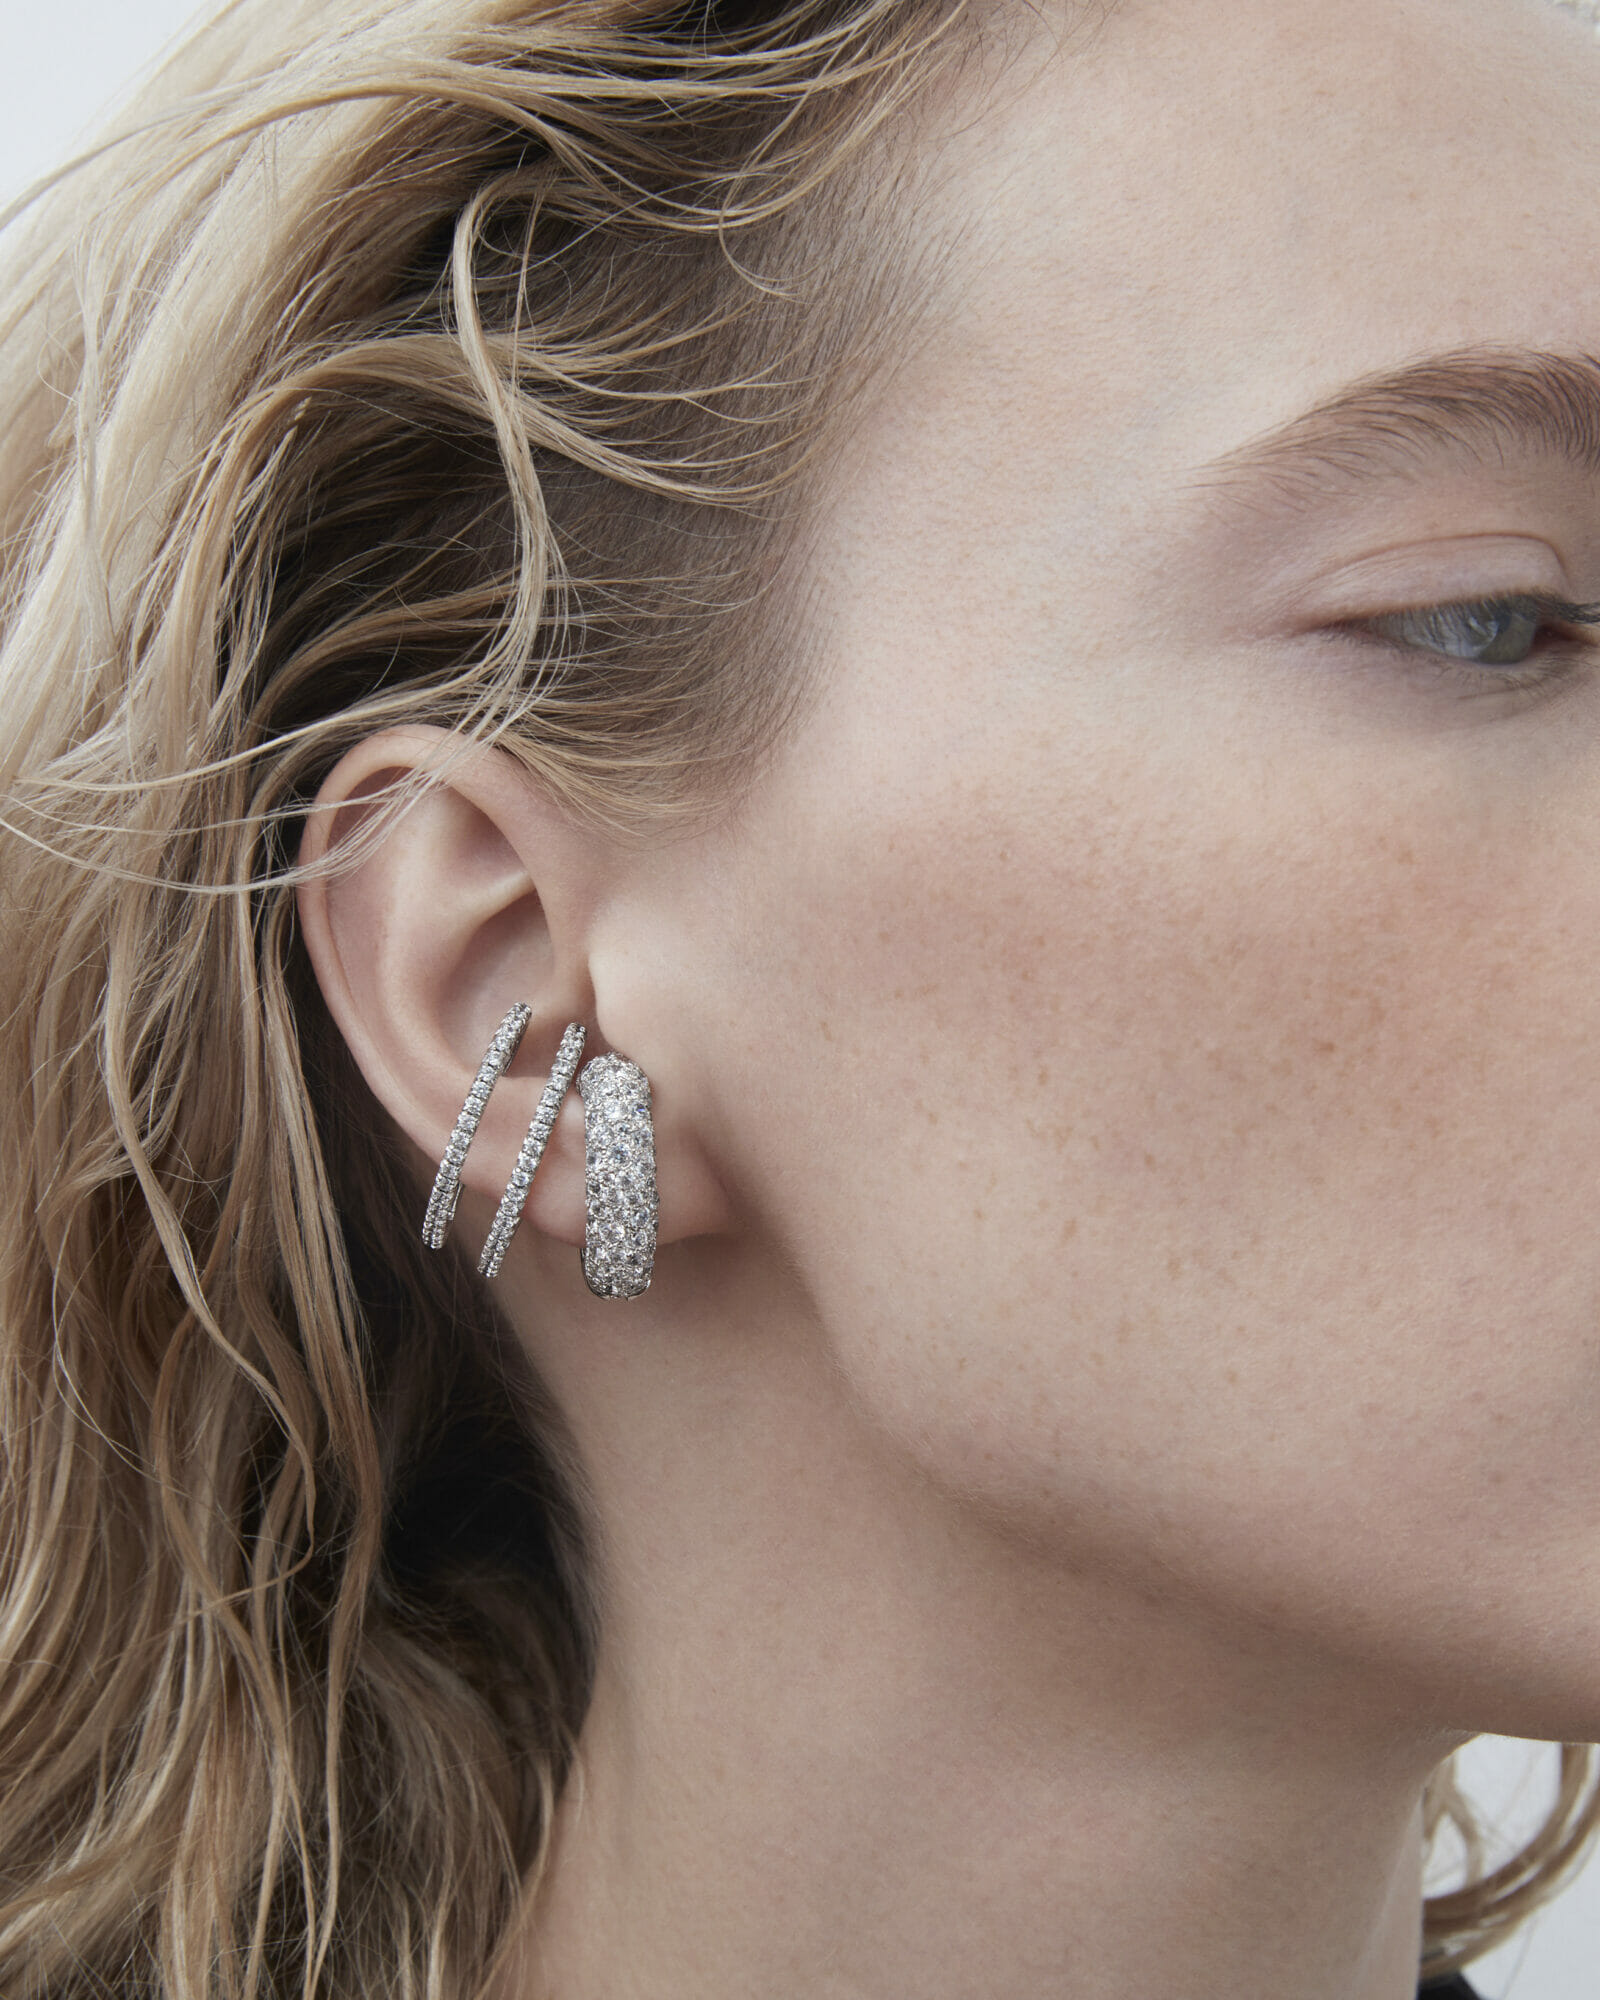 Model wearring Ana Khouri earrings